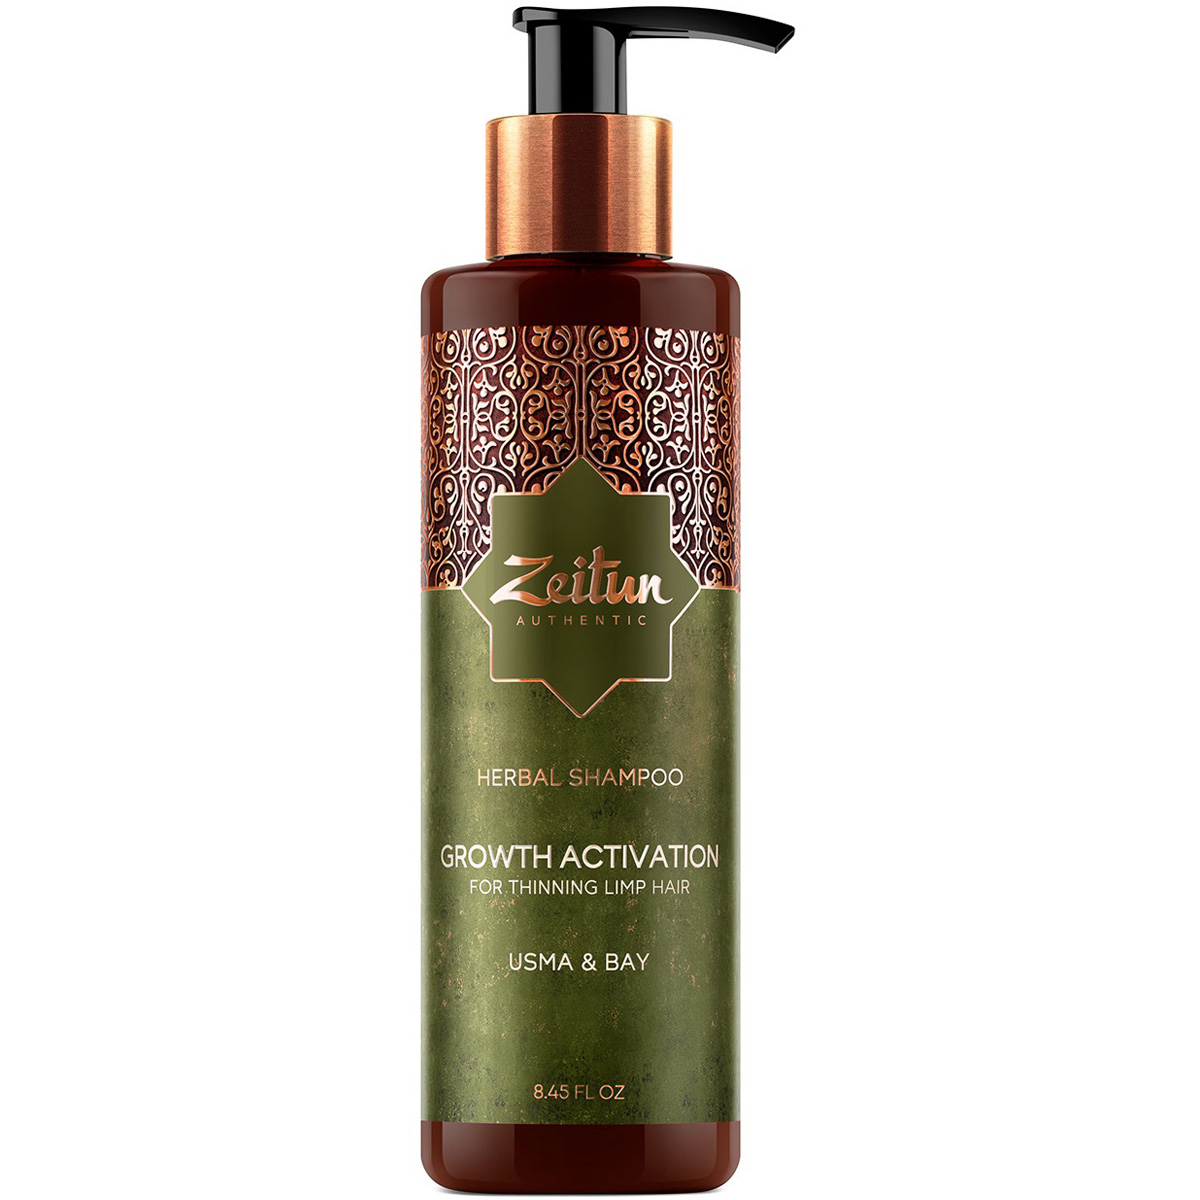 Zeitun Фито-шампунь с маслом усьмы для роста волос Growth Activation, 250 мл (Zeitun, Authentic) фито шампунь для роста волос zeitun с маслом усьмы 250 мл